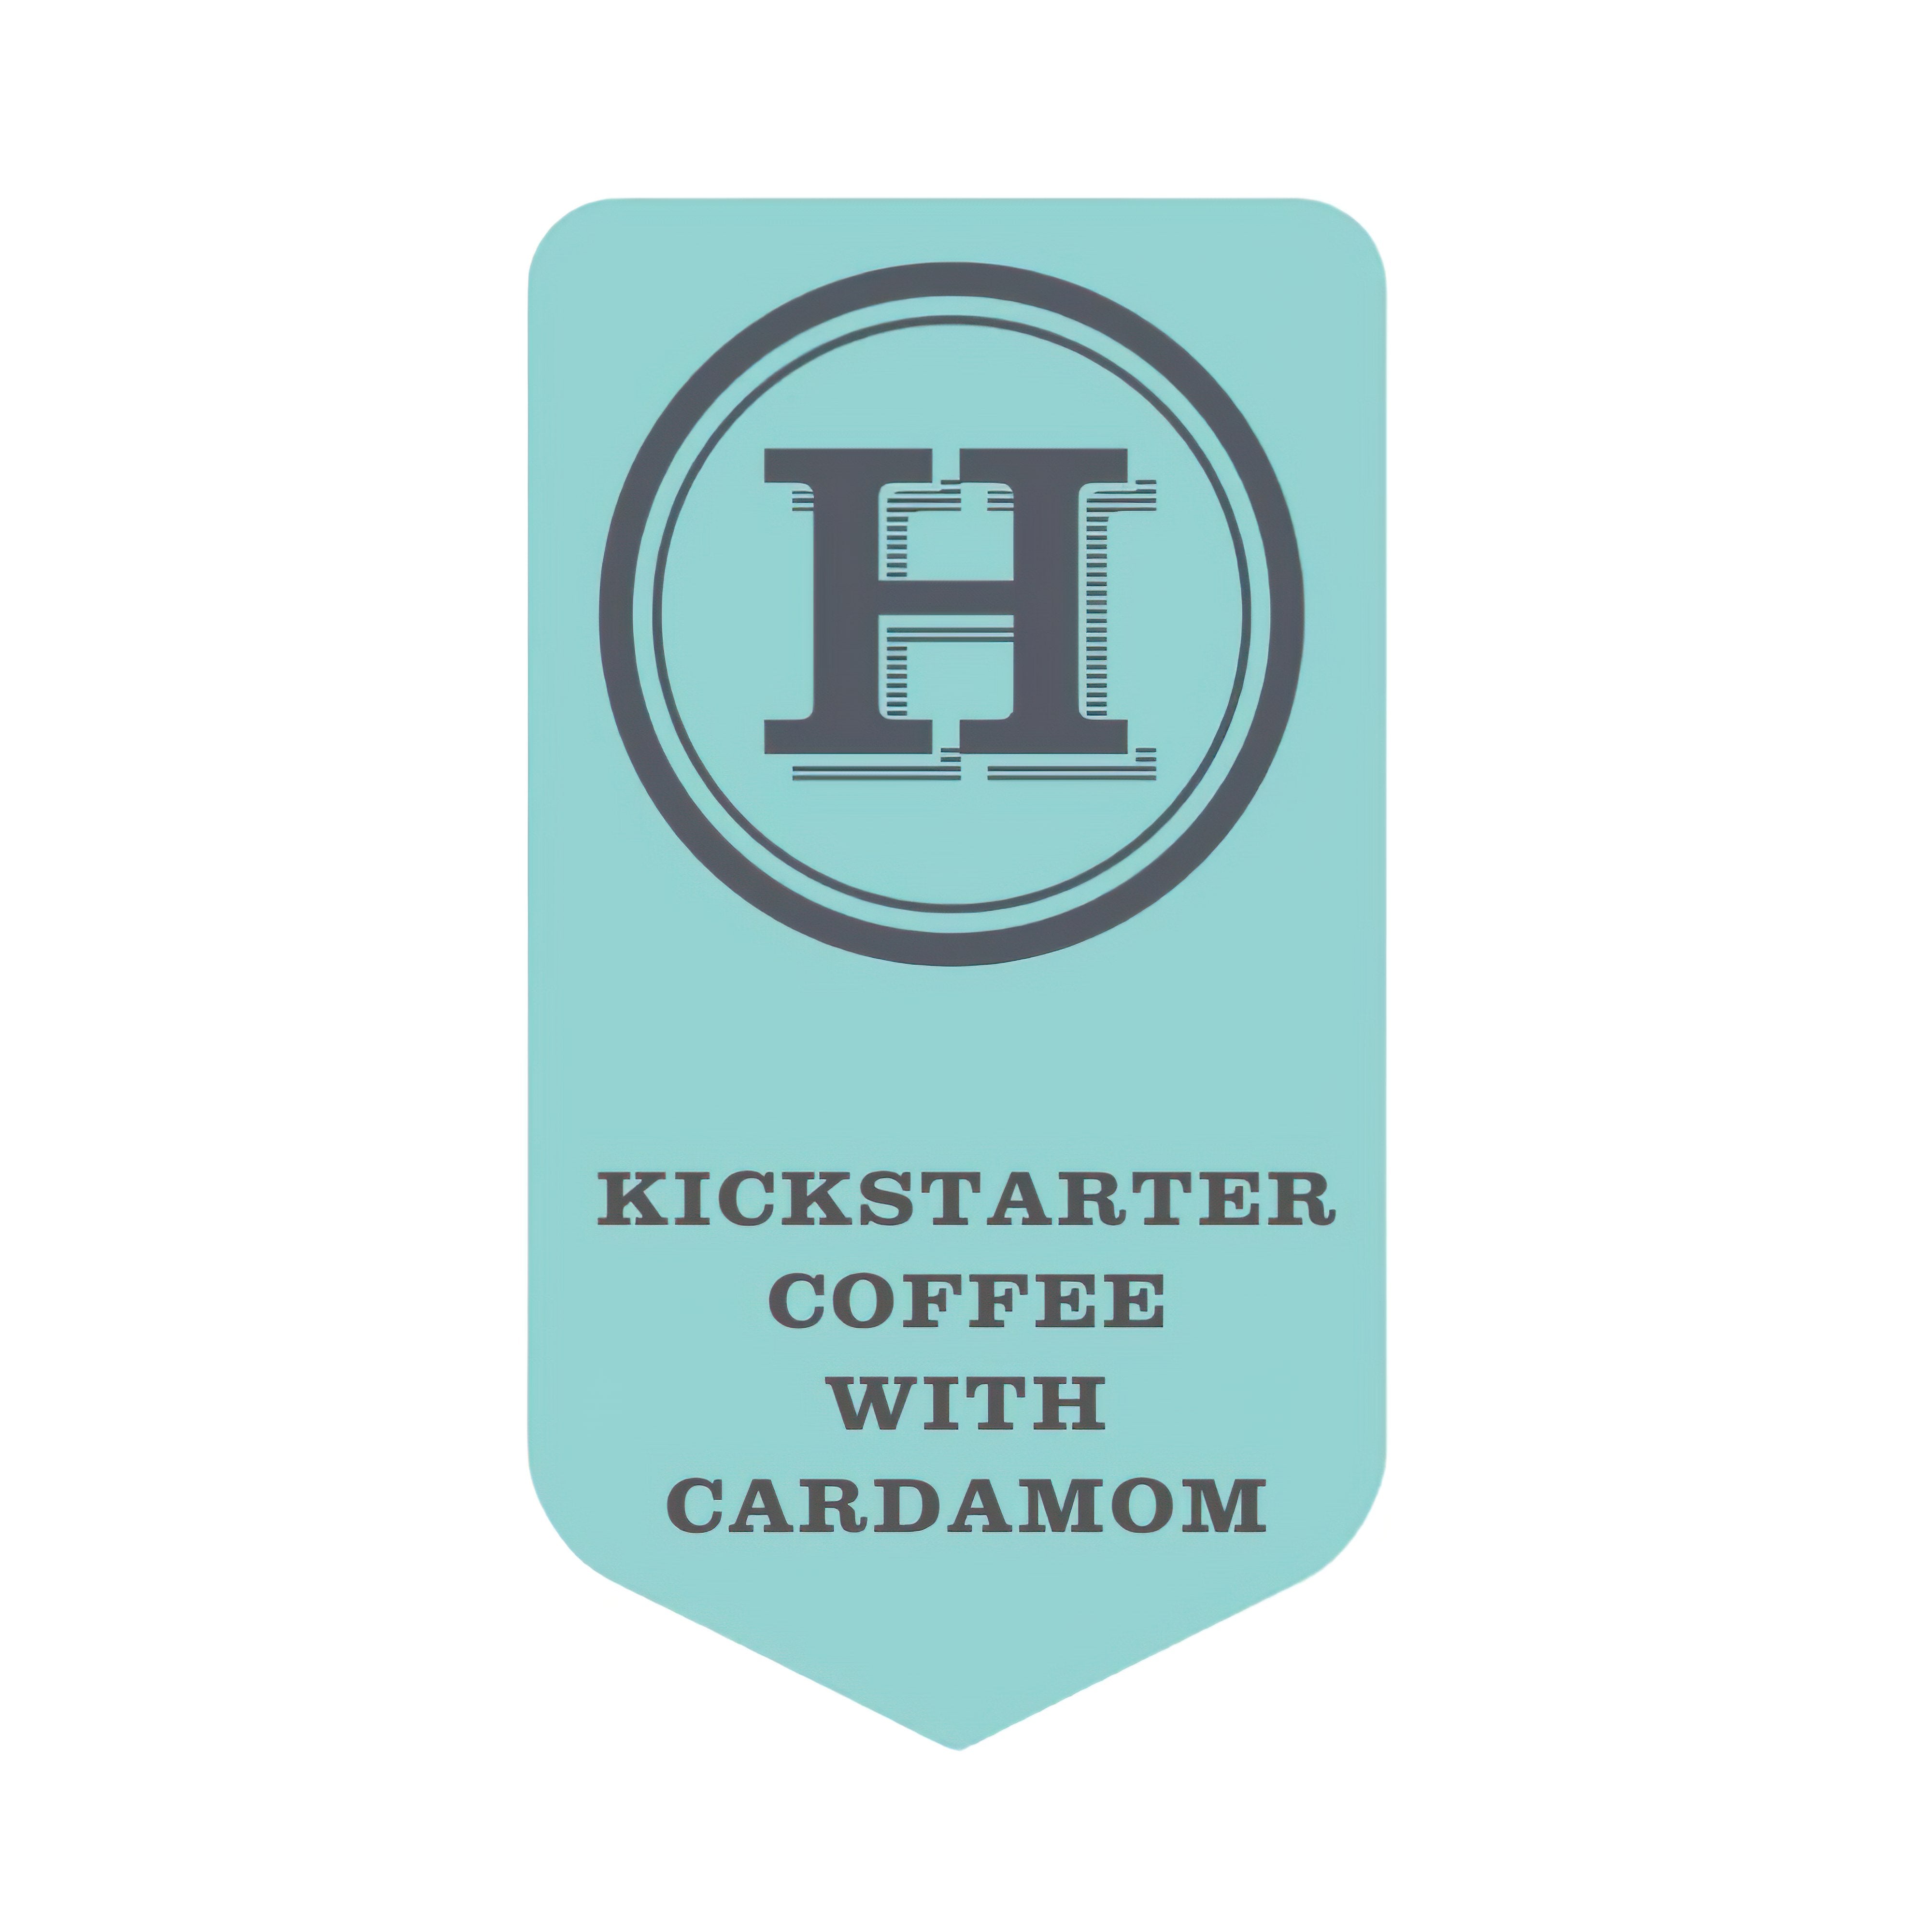 Kickstarter Coffee with cardamom